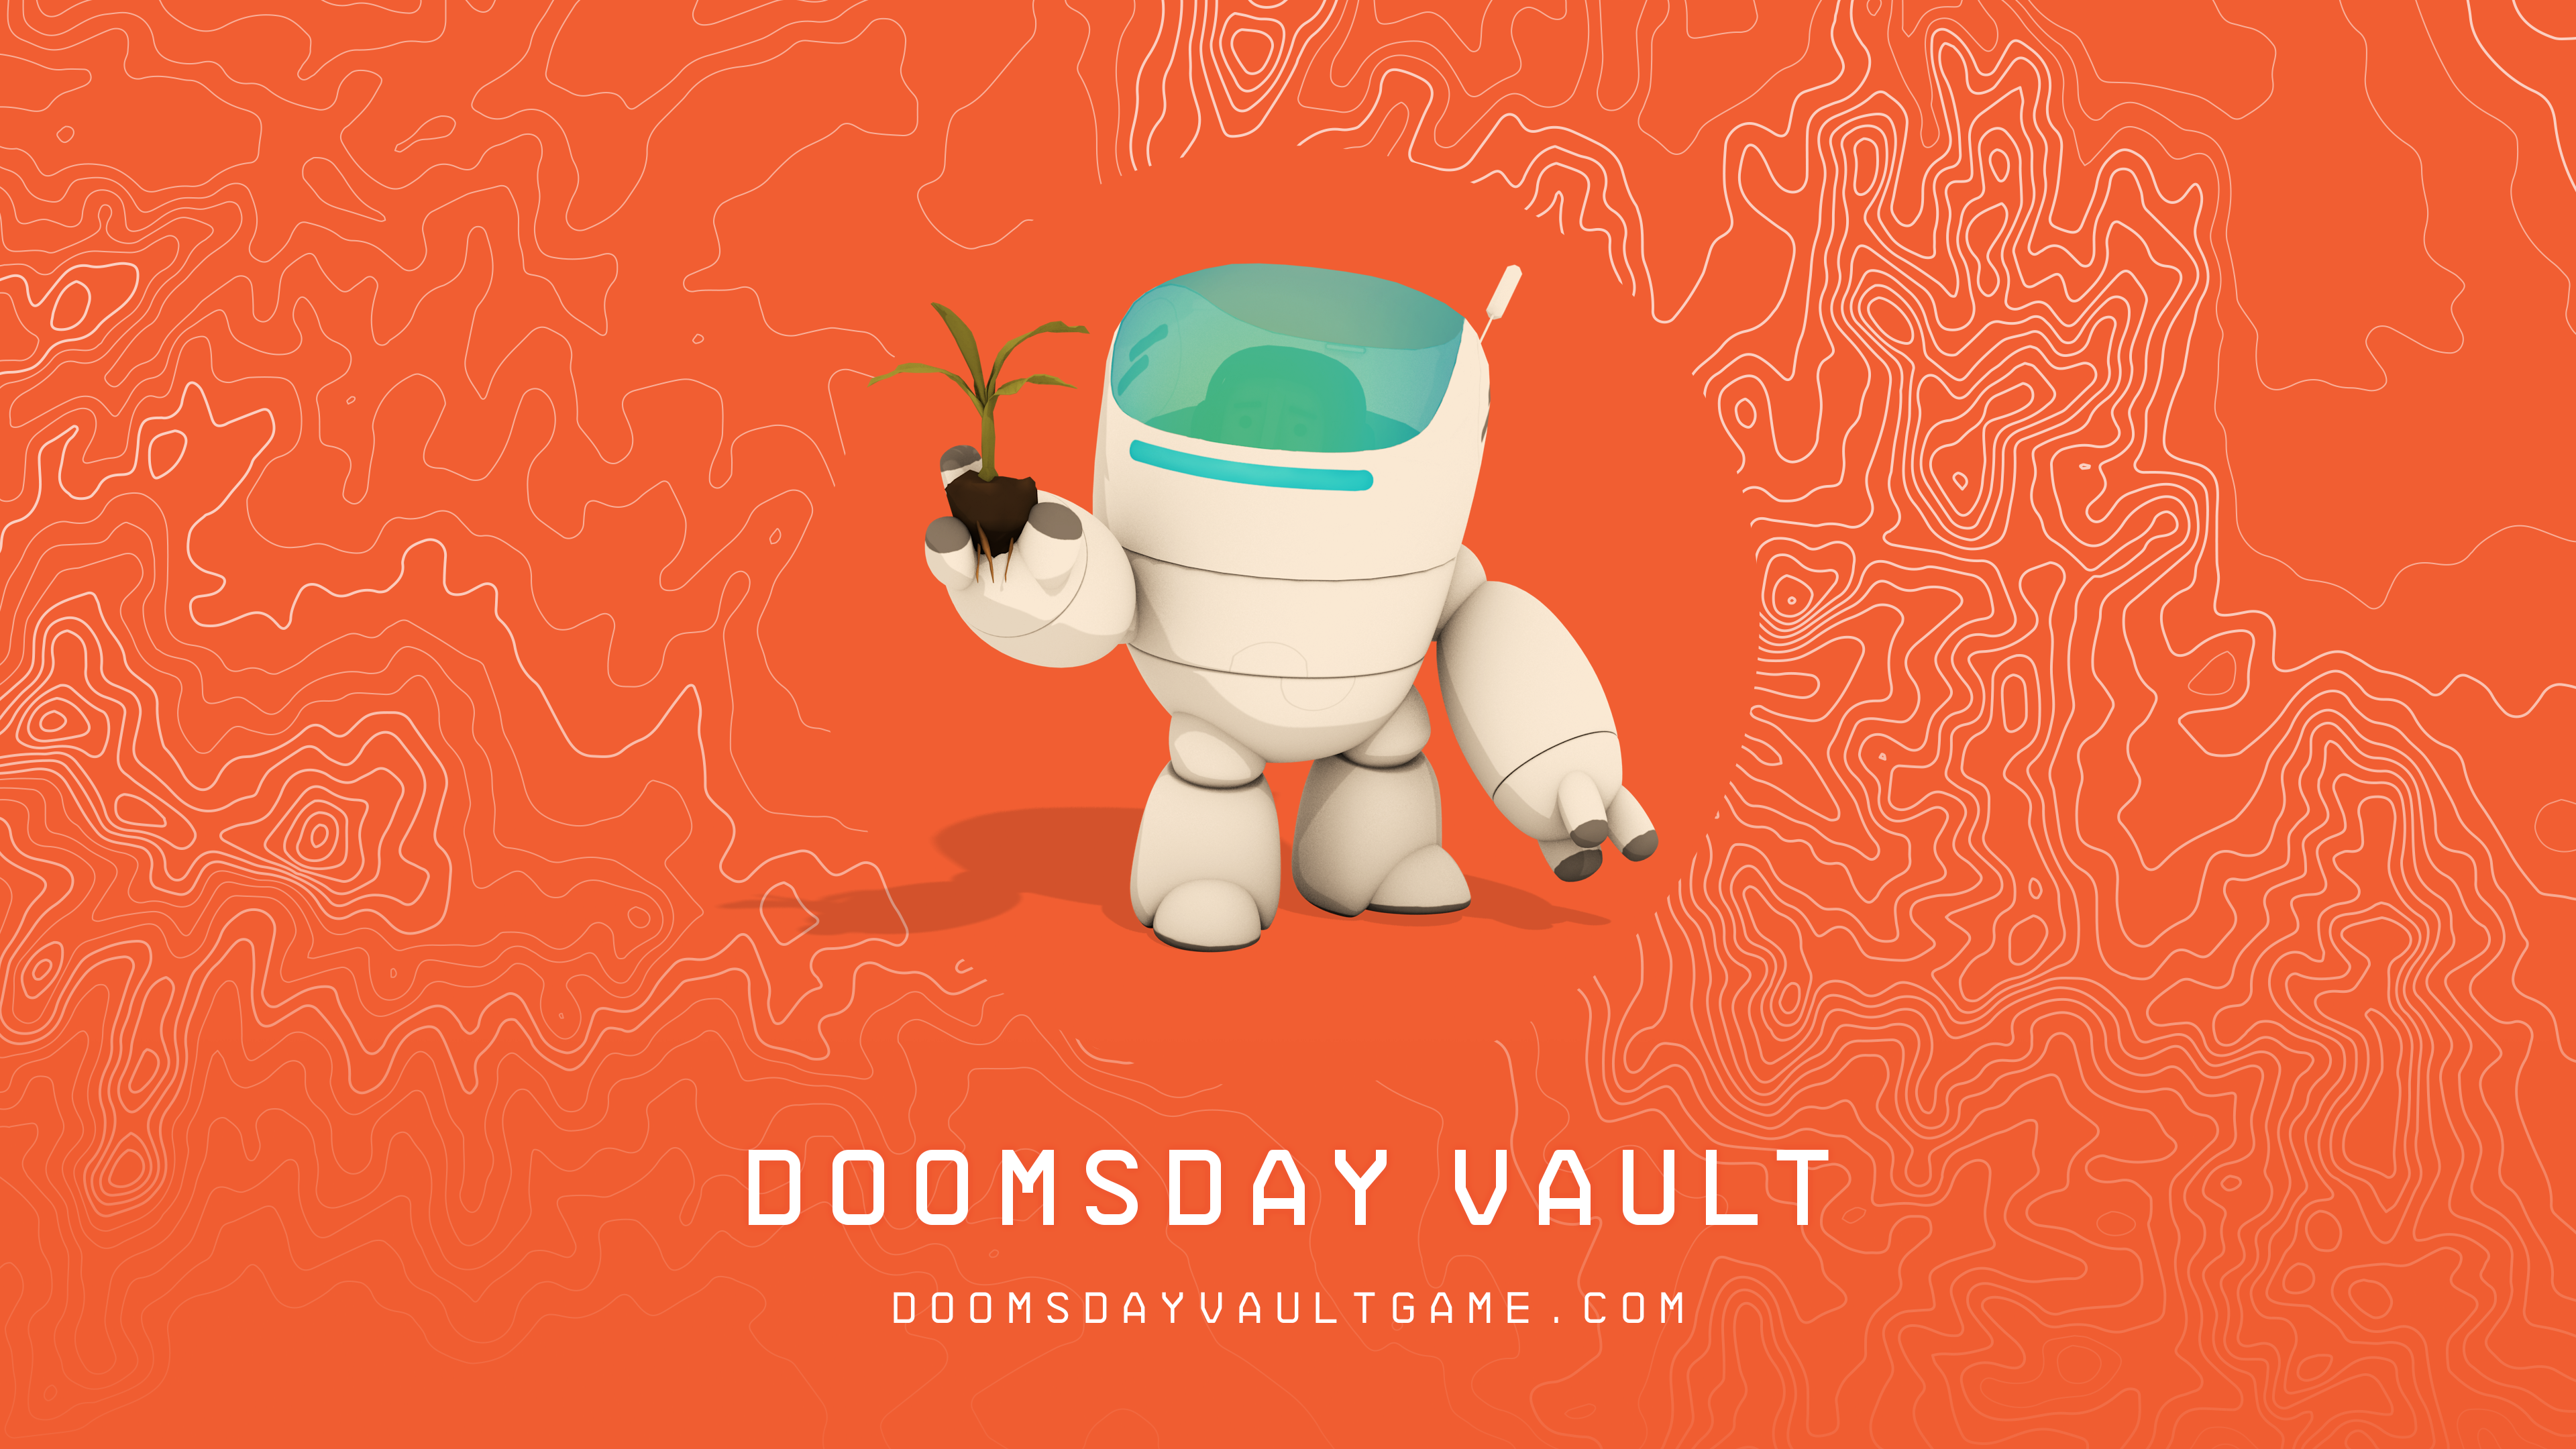 Doomsday_Vault_identity_pose_01.png